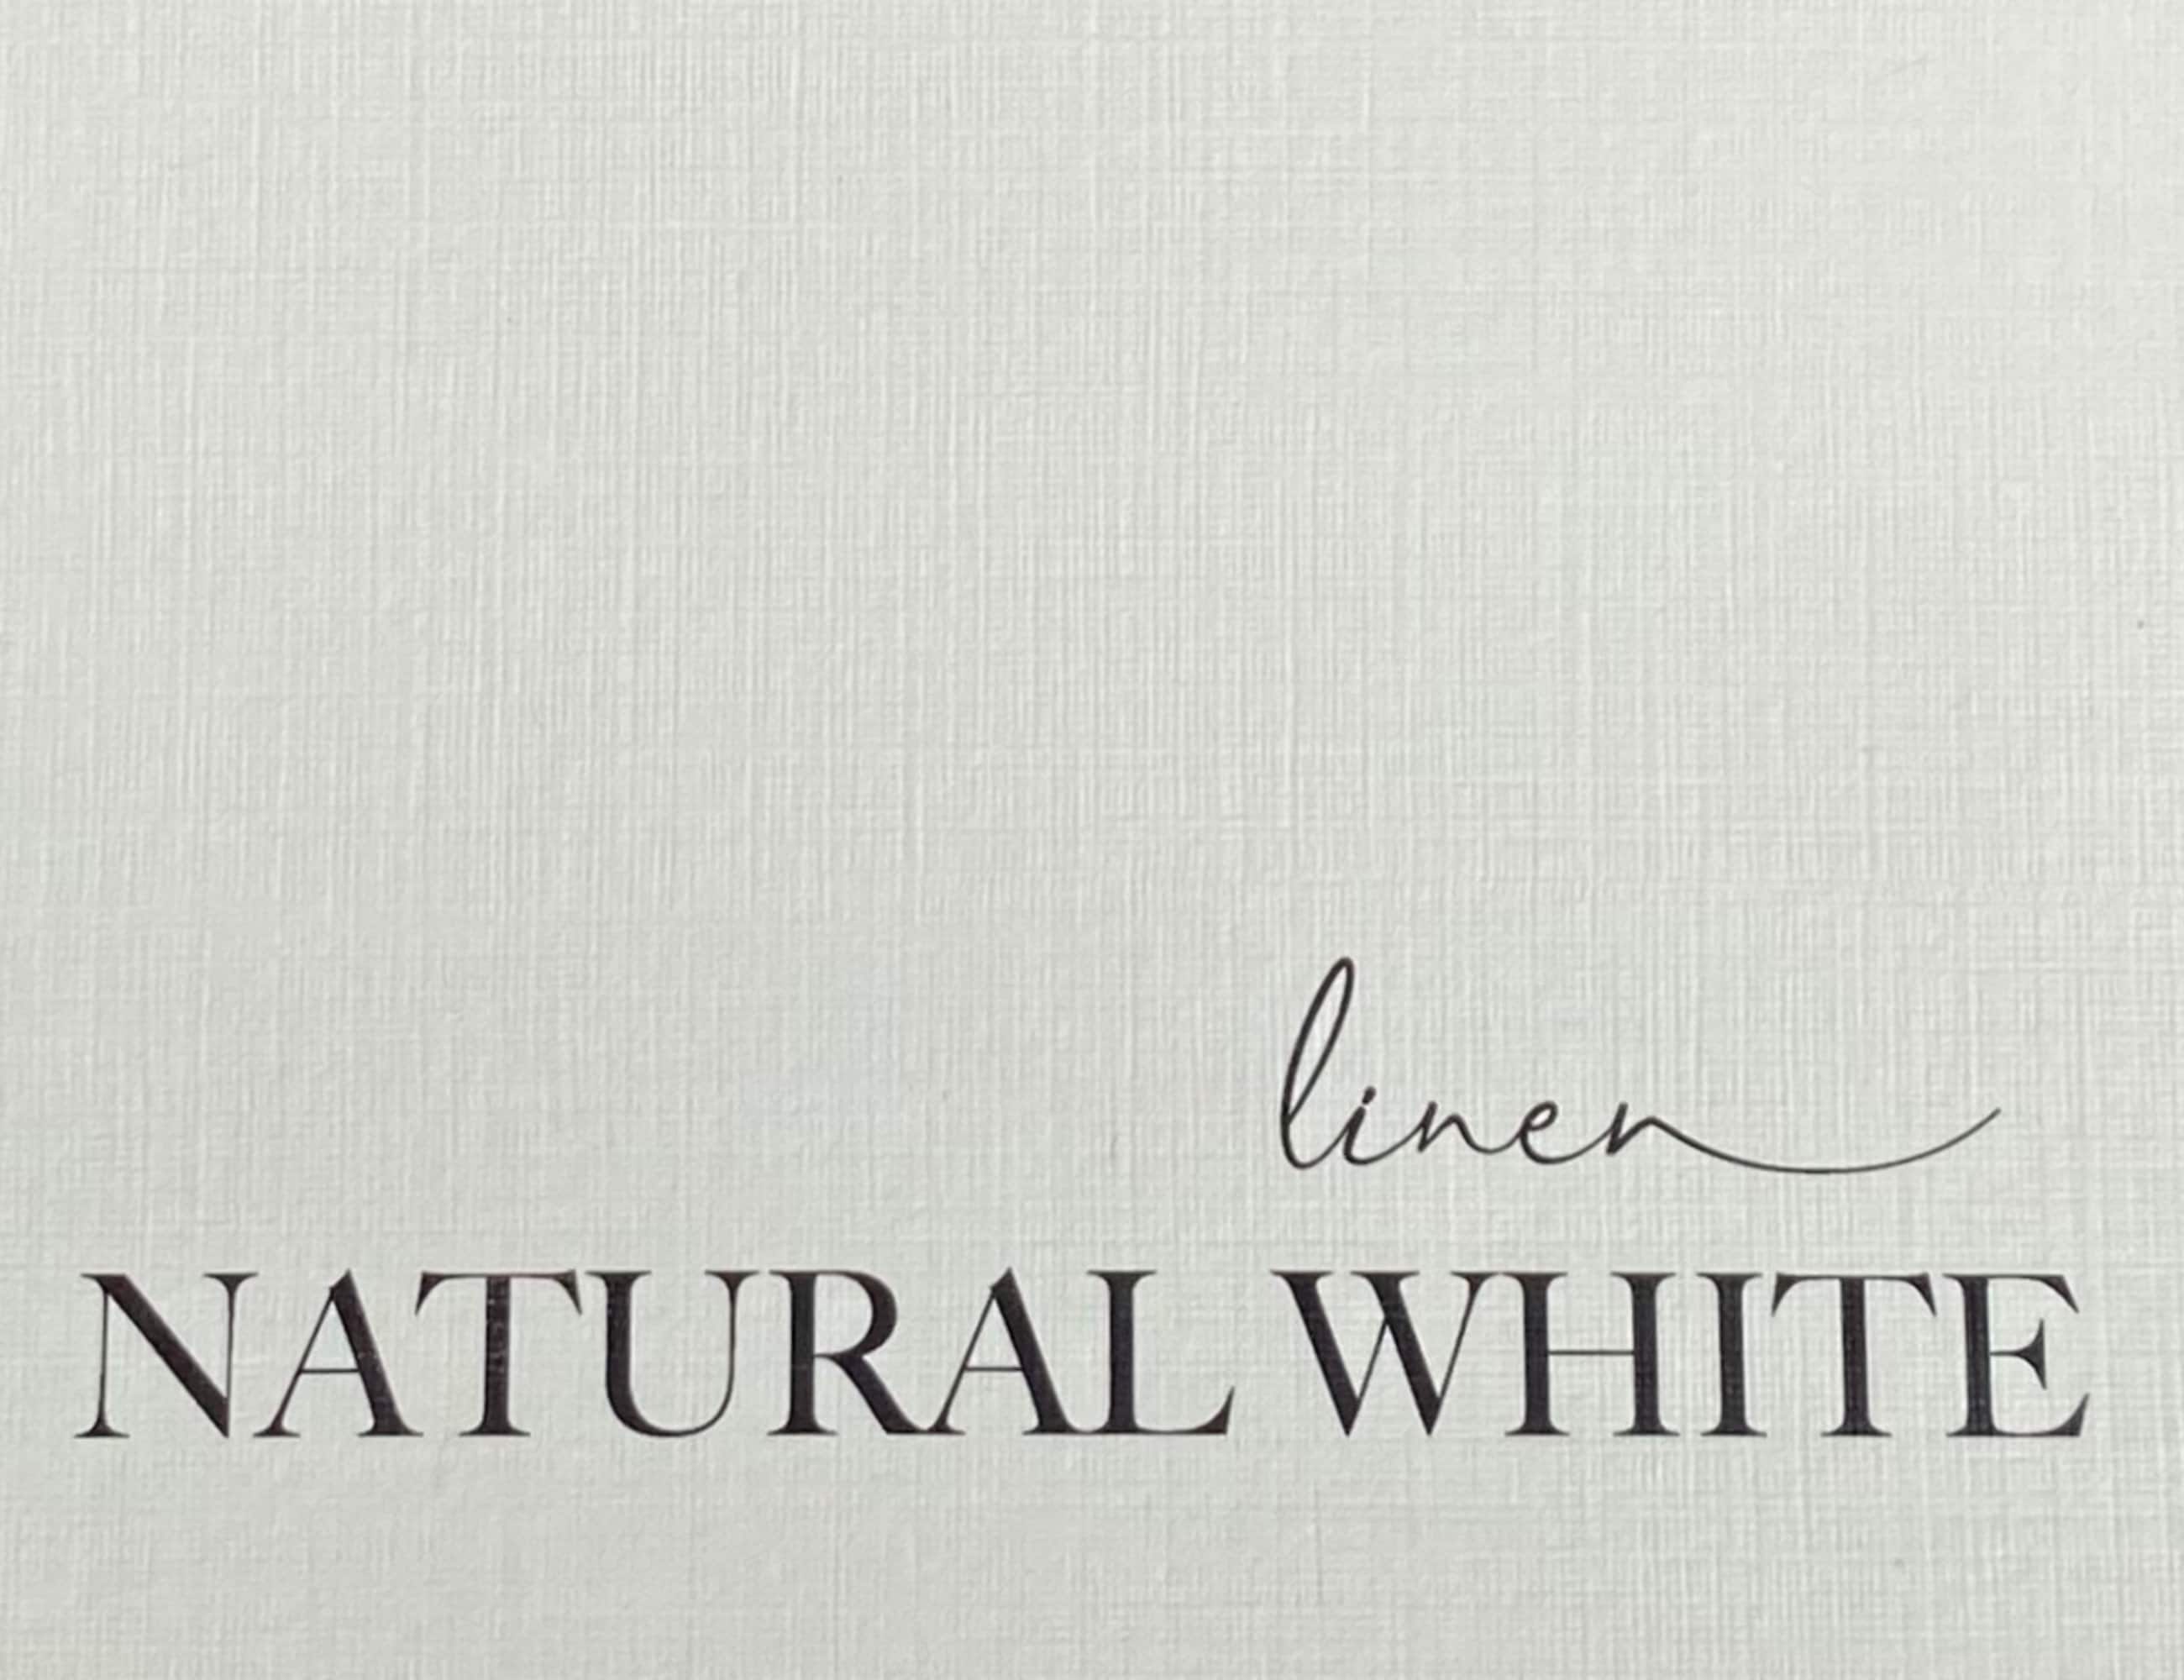 Premium Natural Linen 80lb 8.5 x 11 Cardstock - Ideal Choice